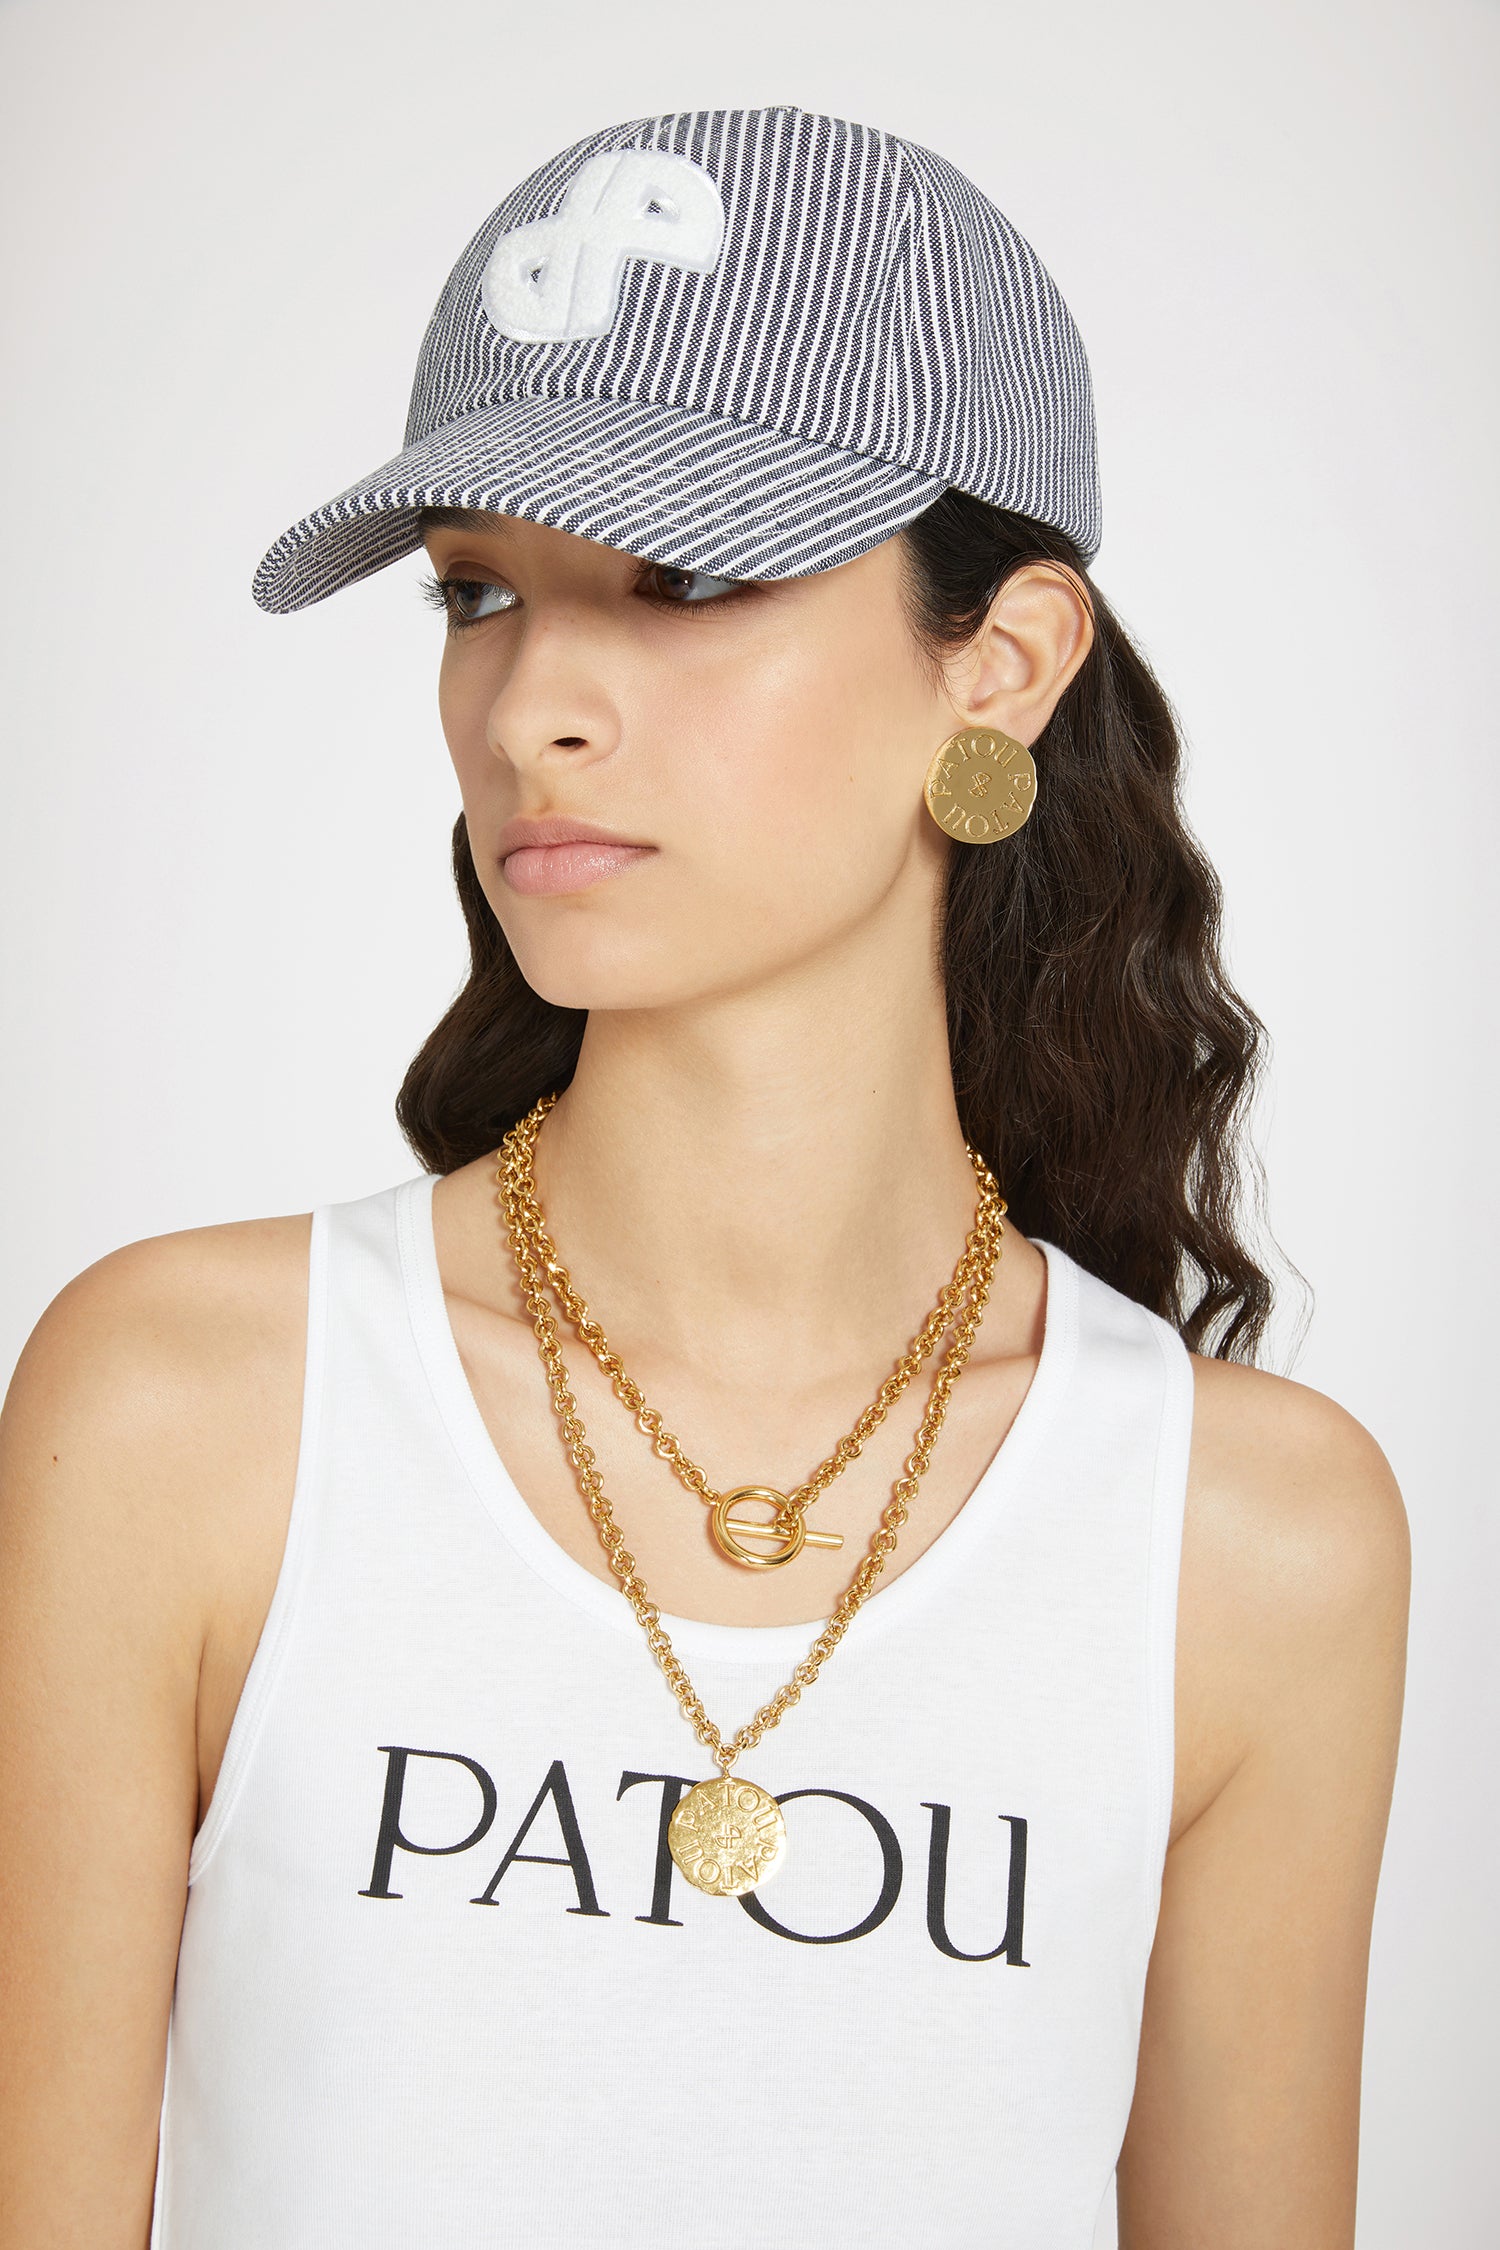 Patou | Hats